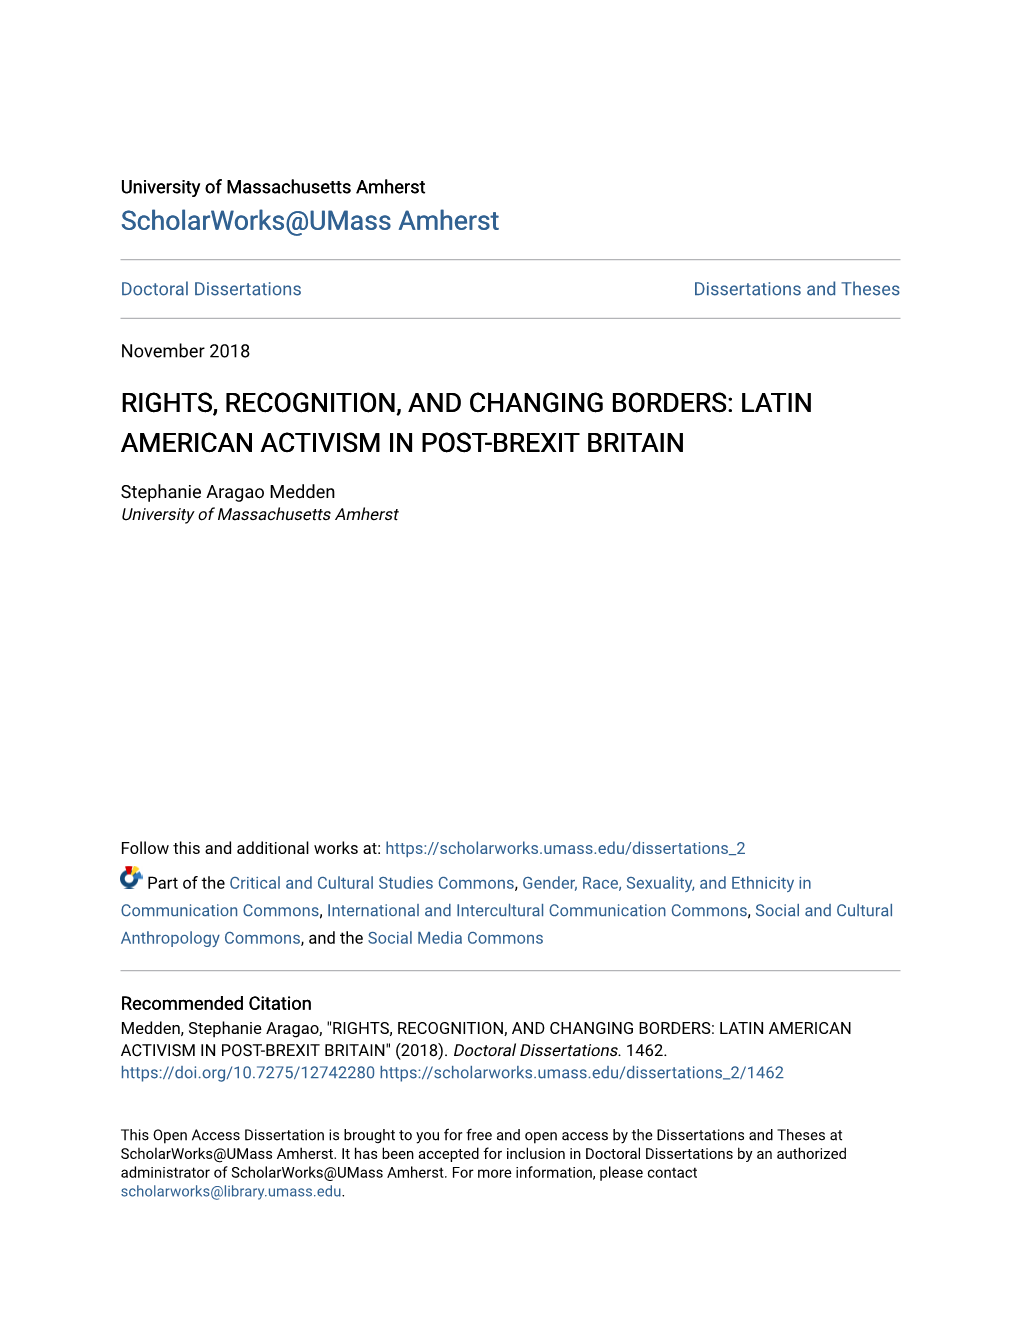 Latin American Activism in Post-Brexit Britain